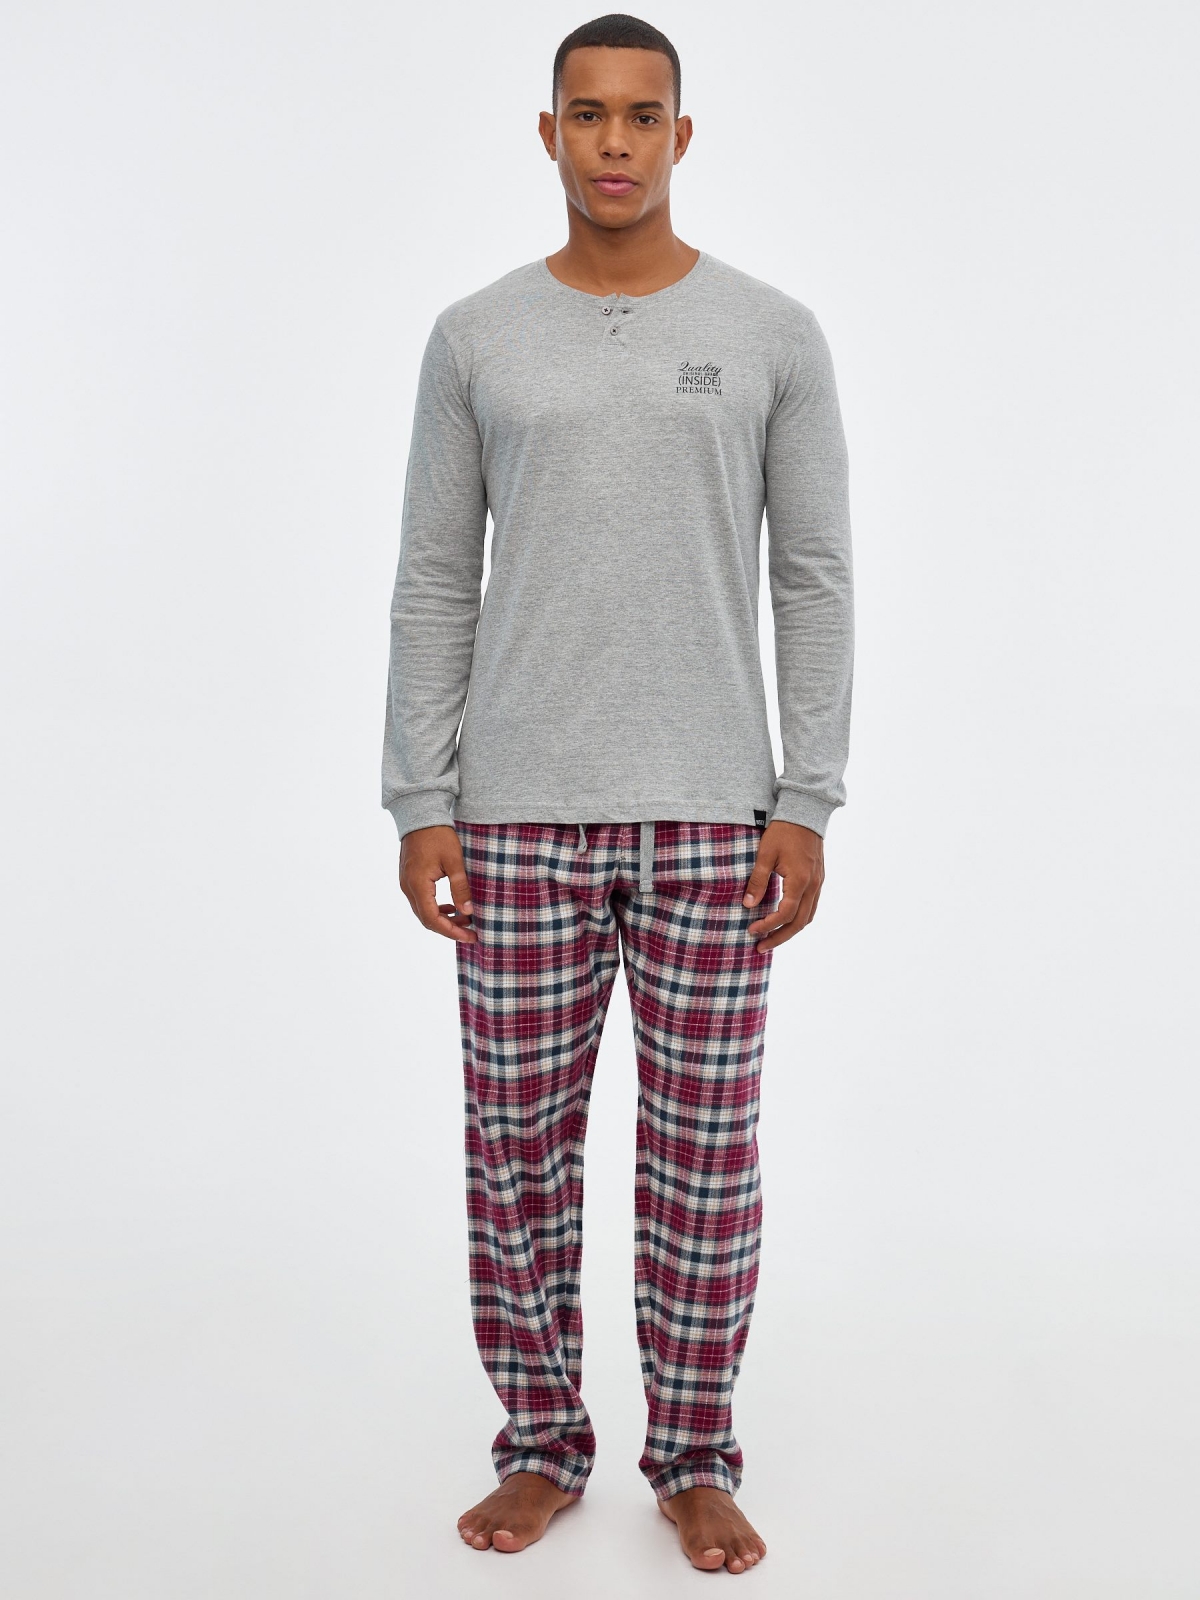 Plaid pajama pants grey front view